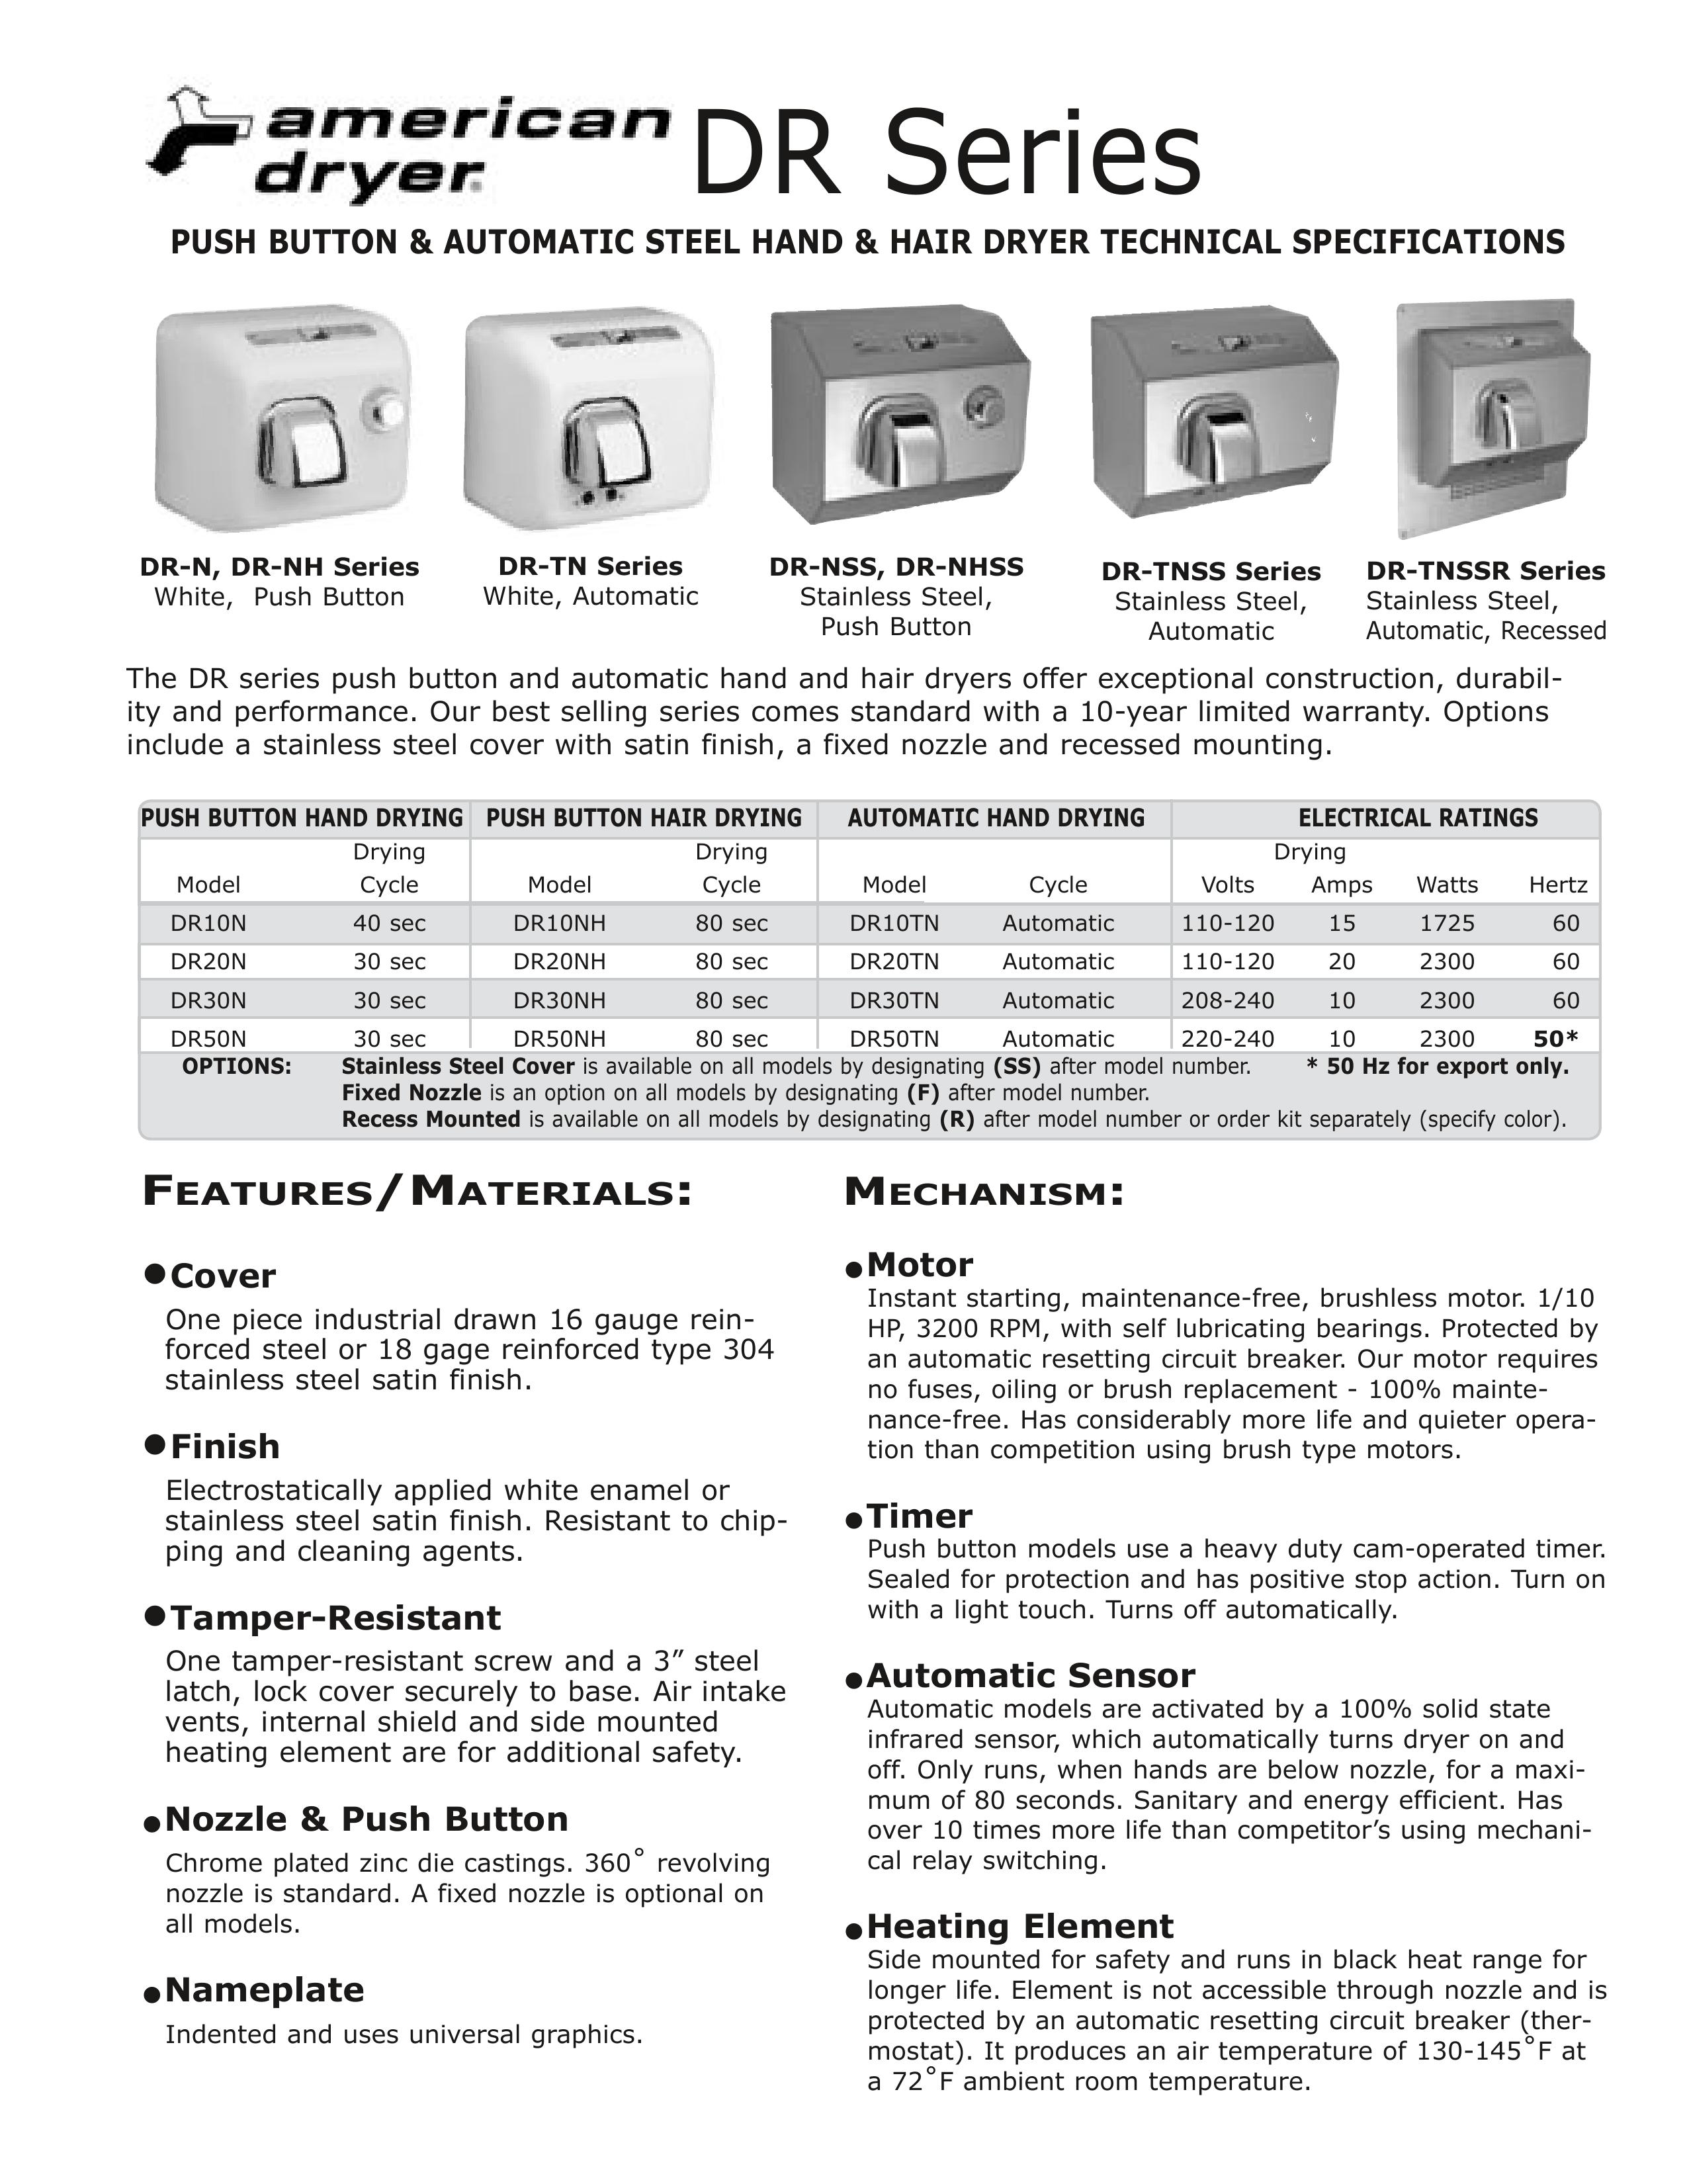 American Dryer DR-TNSS Hair Dryer User Manual